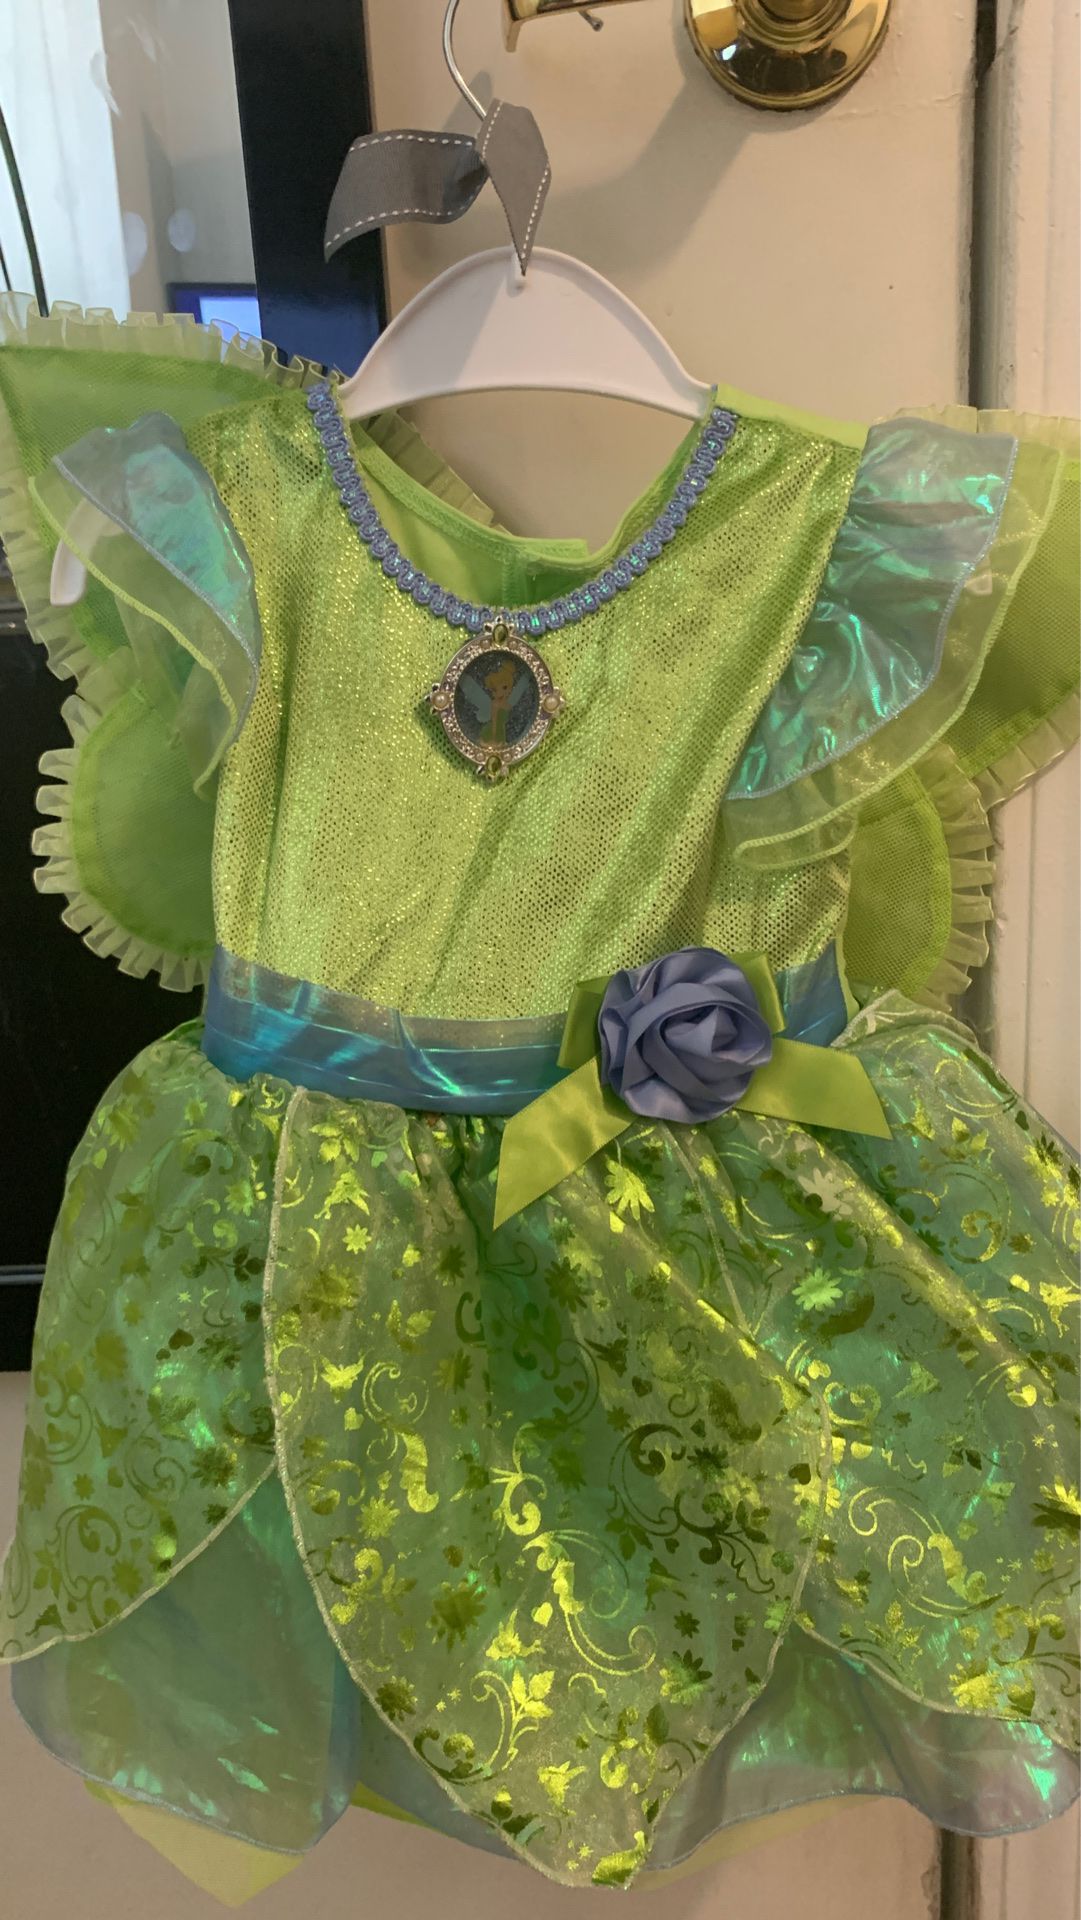 Original Disney Store Tinkerbell costume